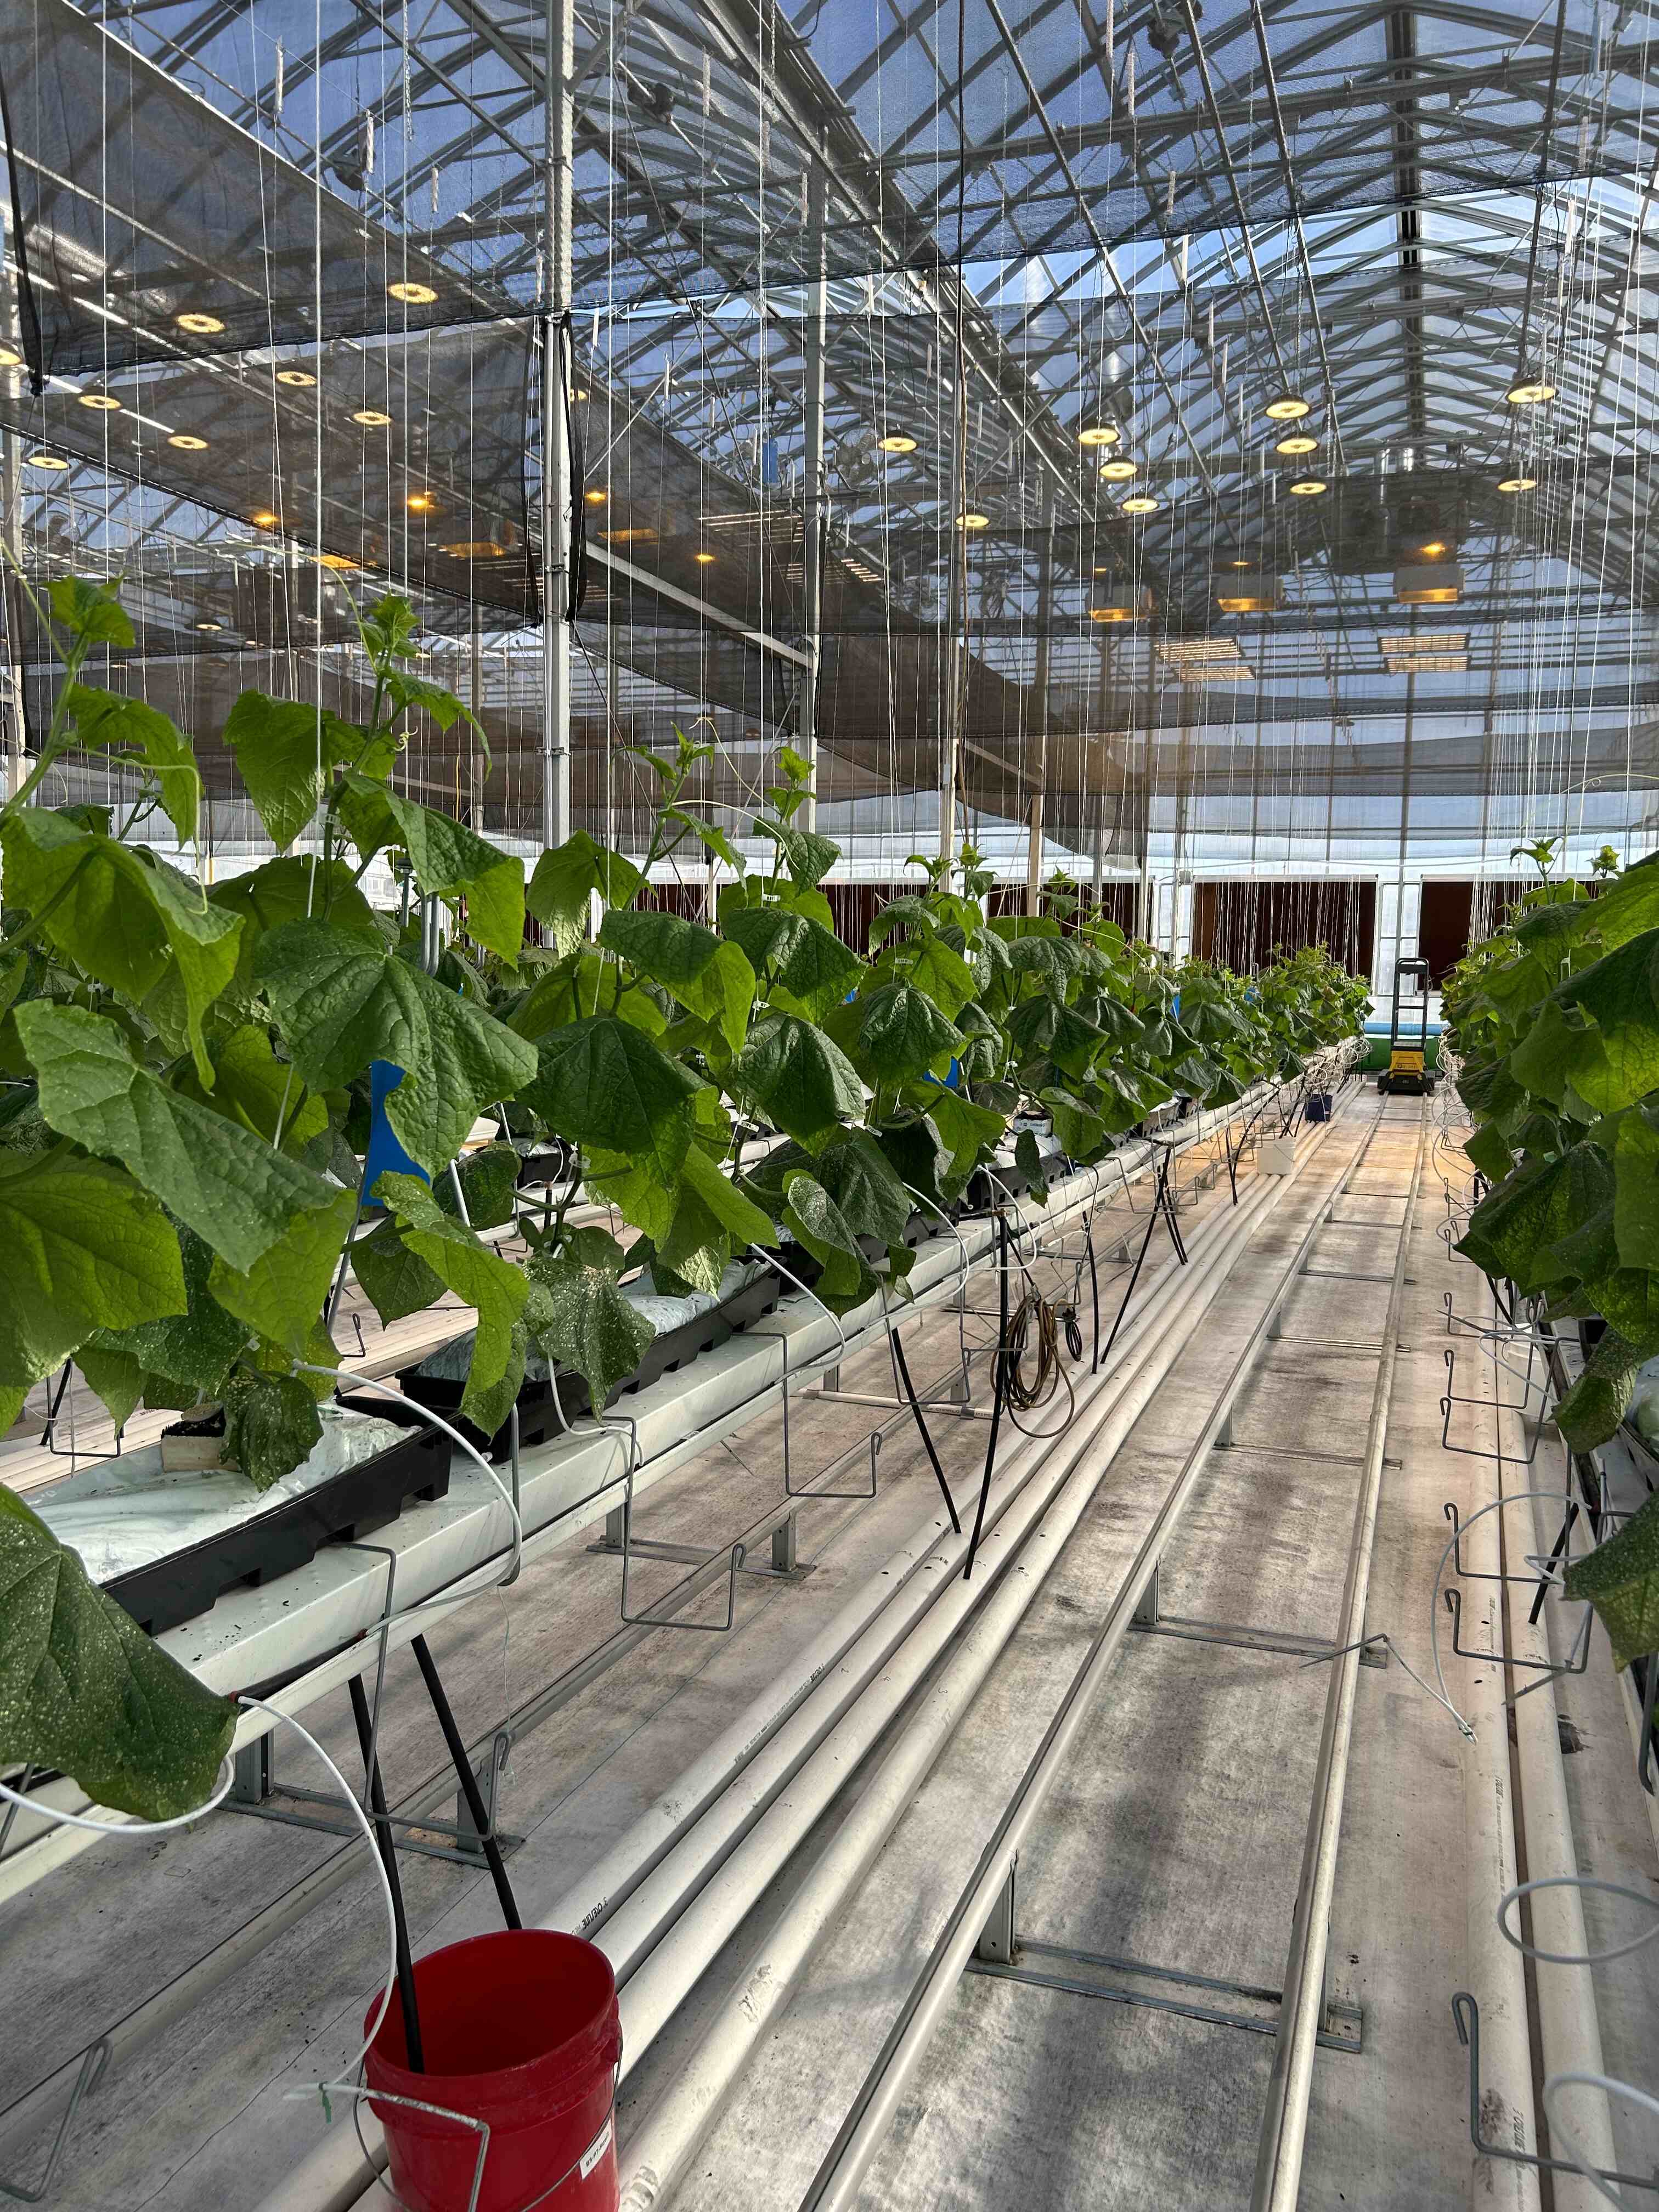 Cucumber plants inside greenhouse